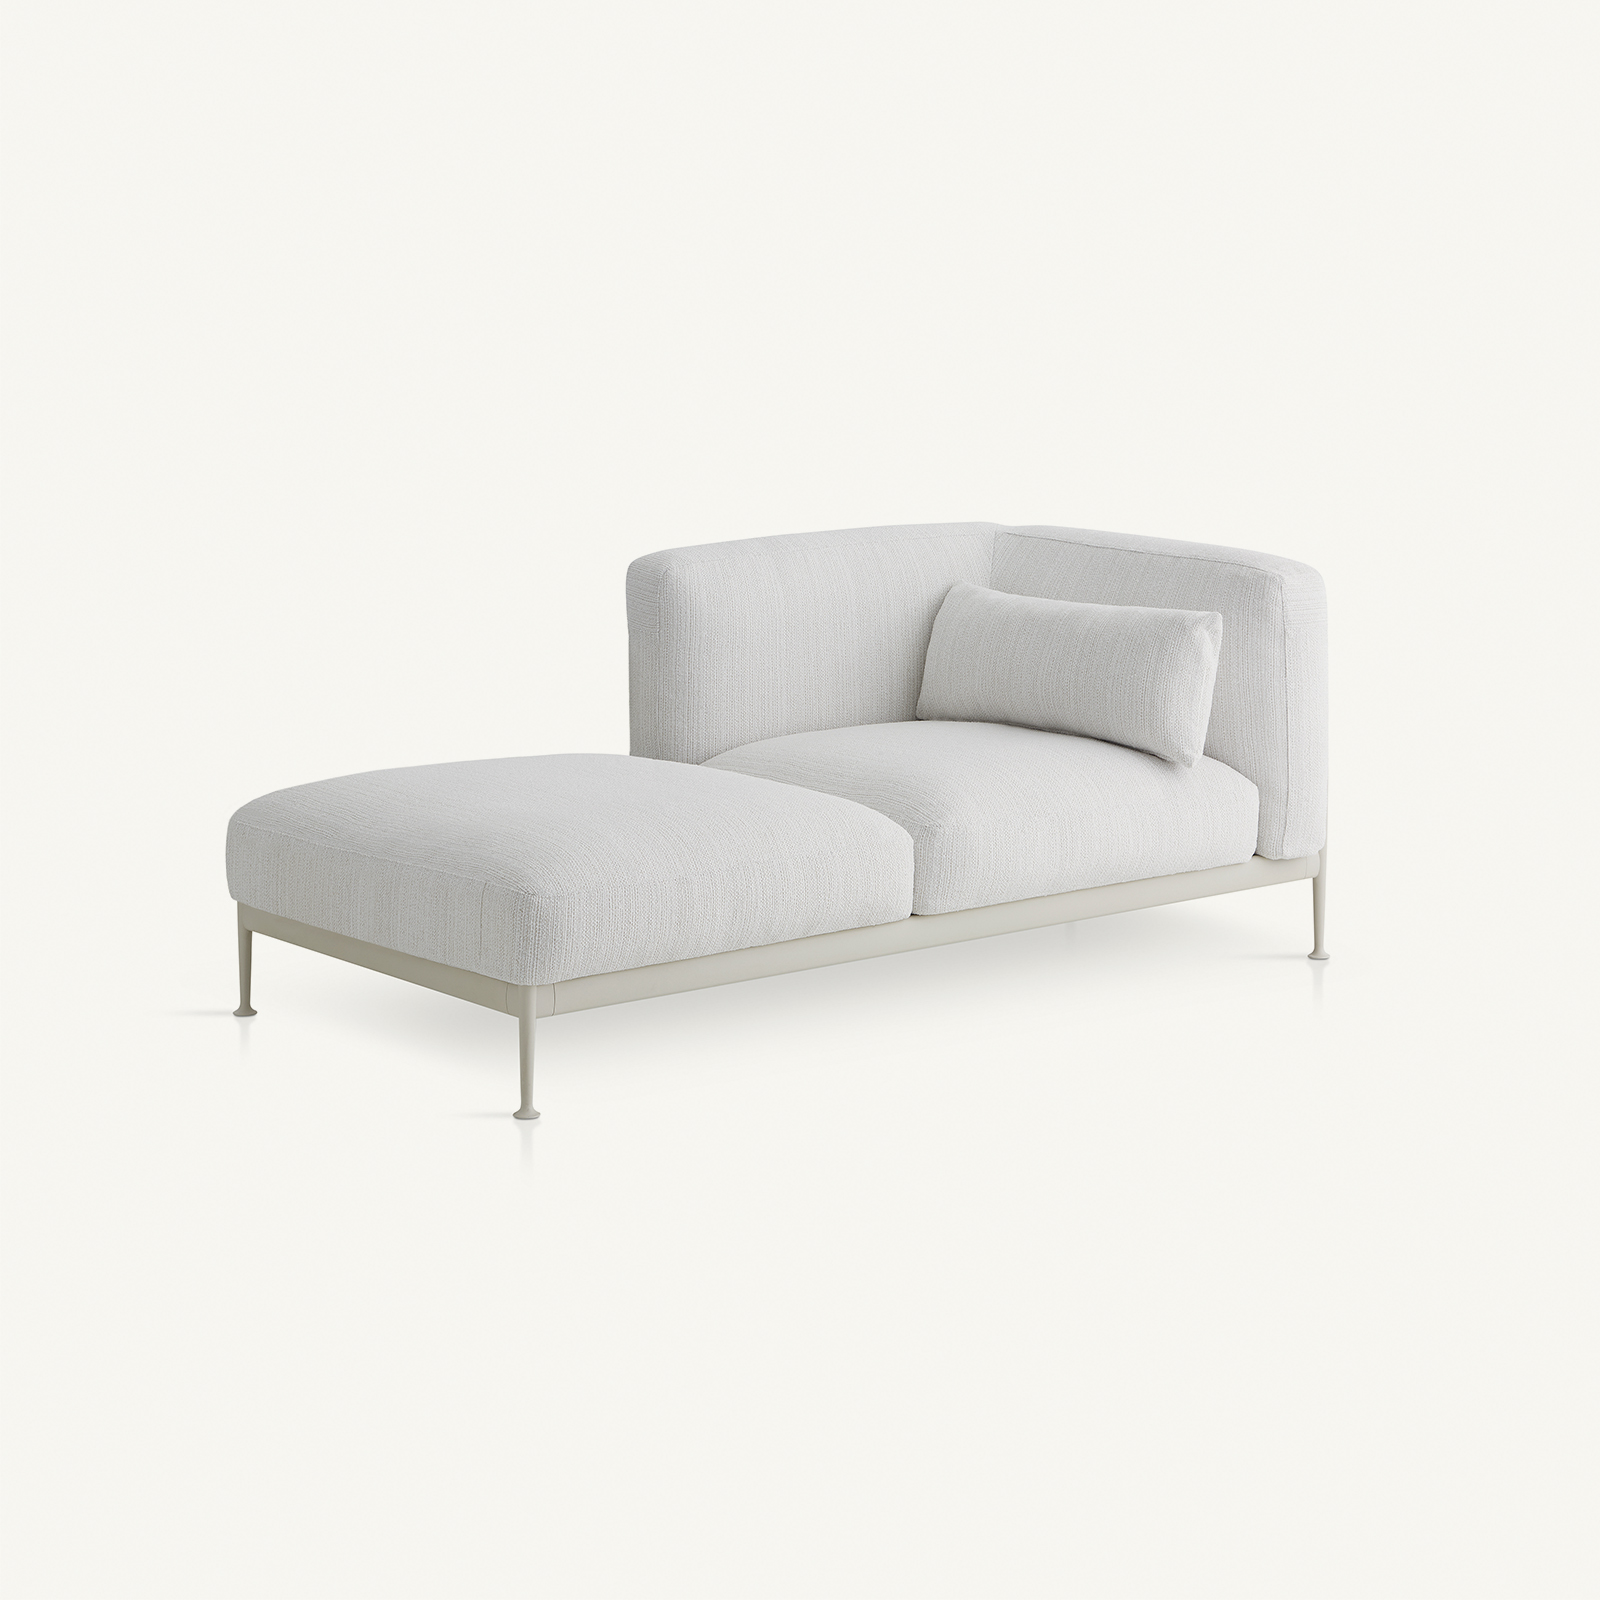 outdoor collection - sofas - obi left chaise longue module